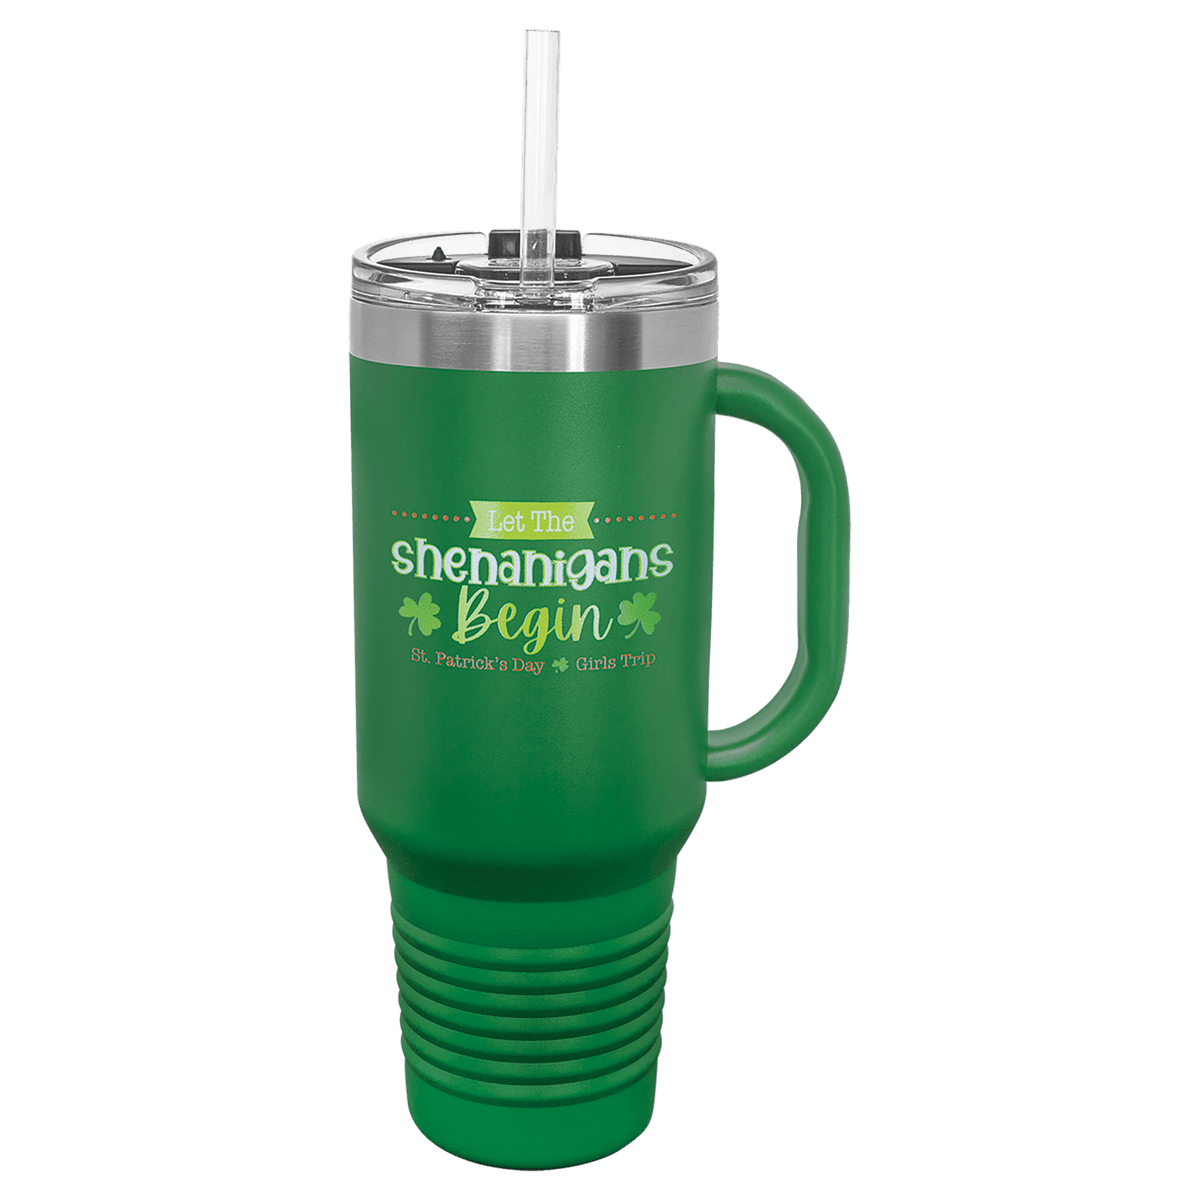 40 oz. Insulated Travel Mug - Ergonomic Handle and Straw